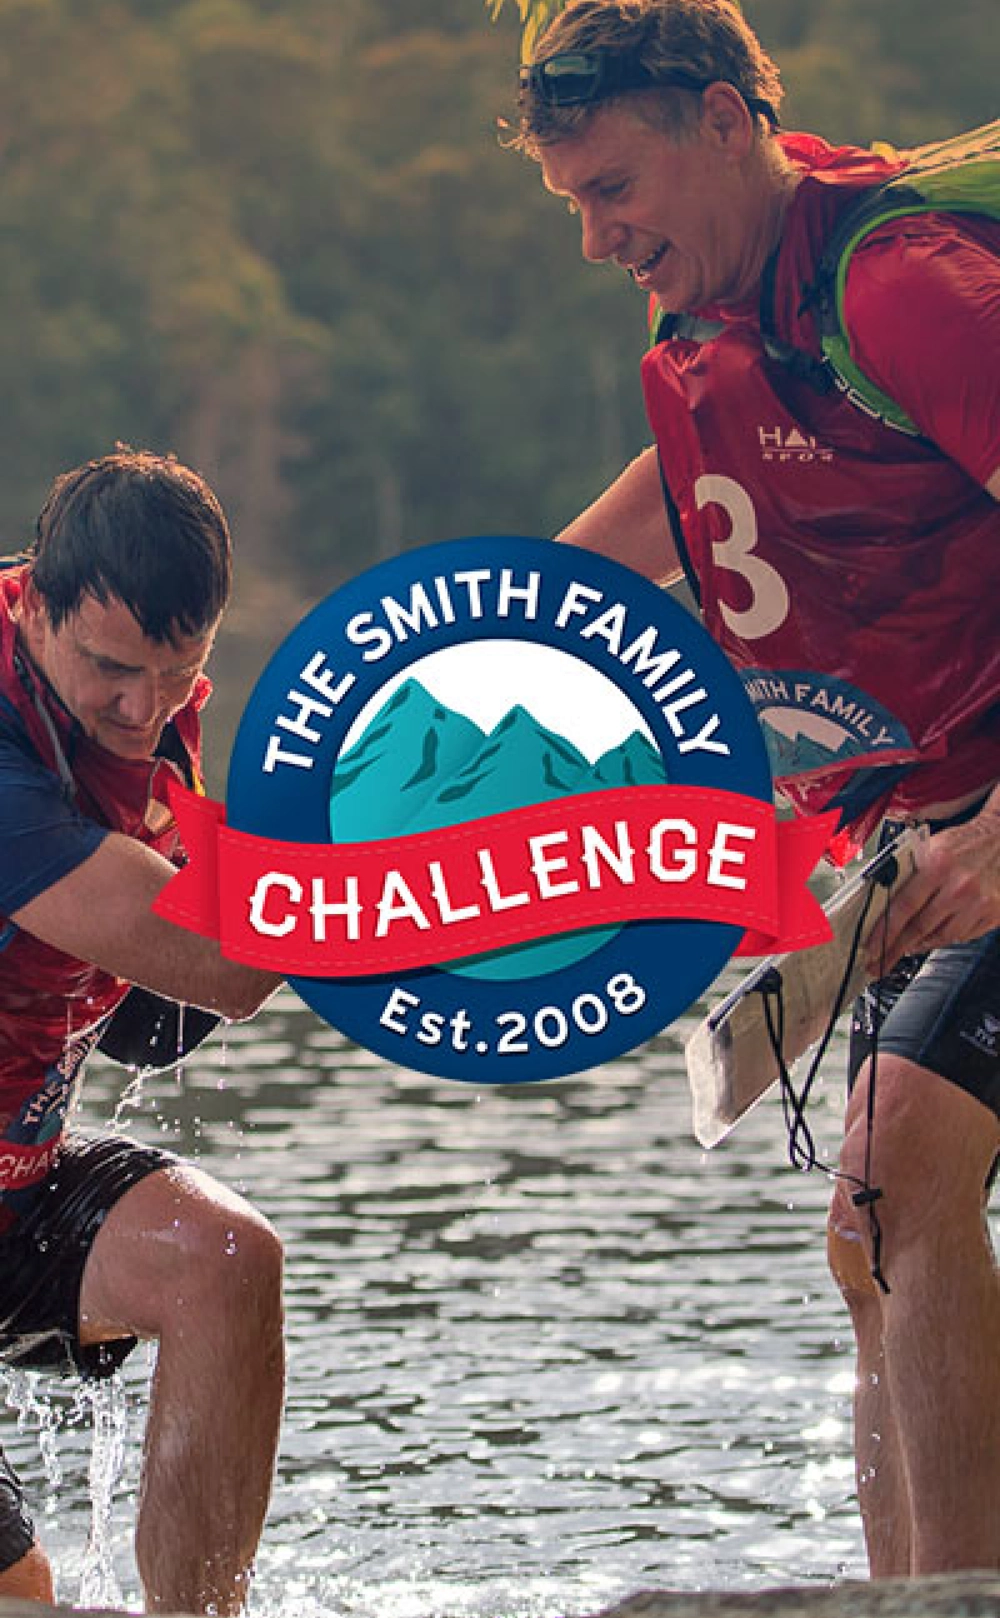 The Smith Family Challenge / Yo Francisco Martinez